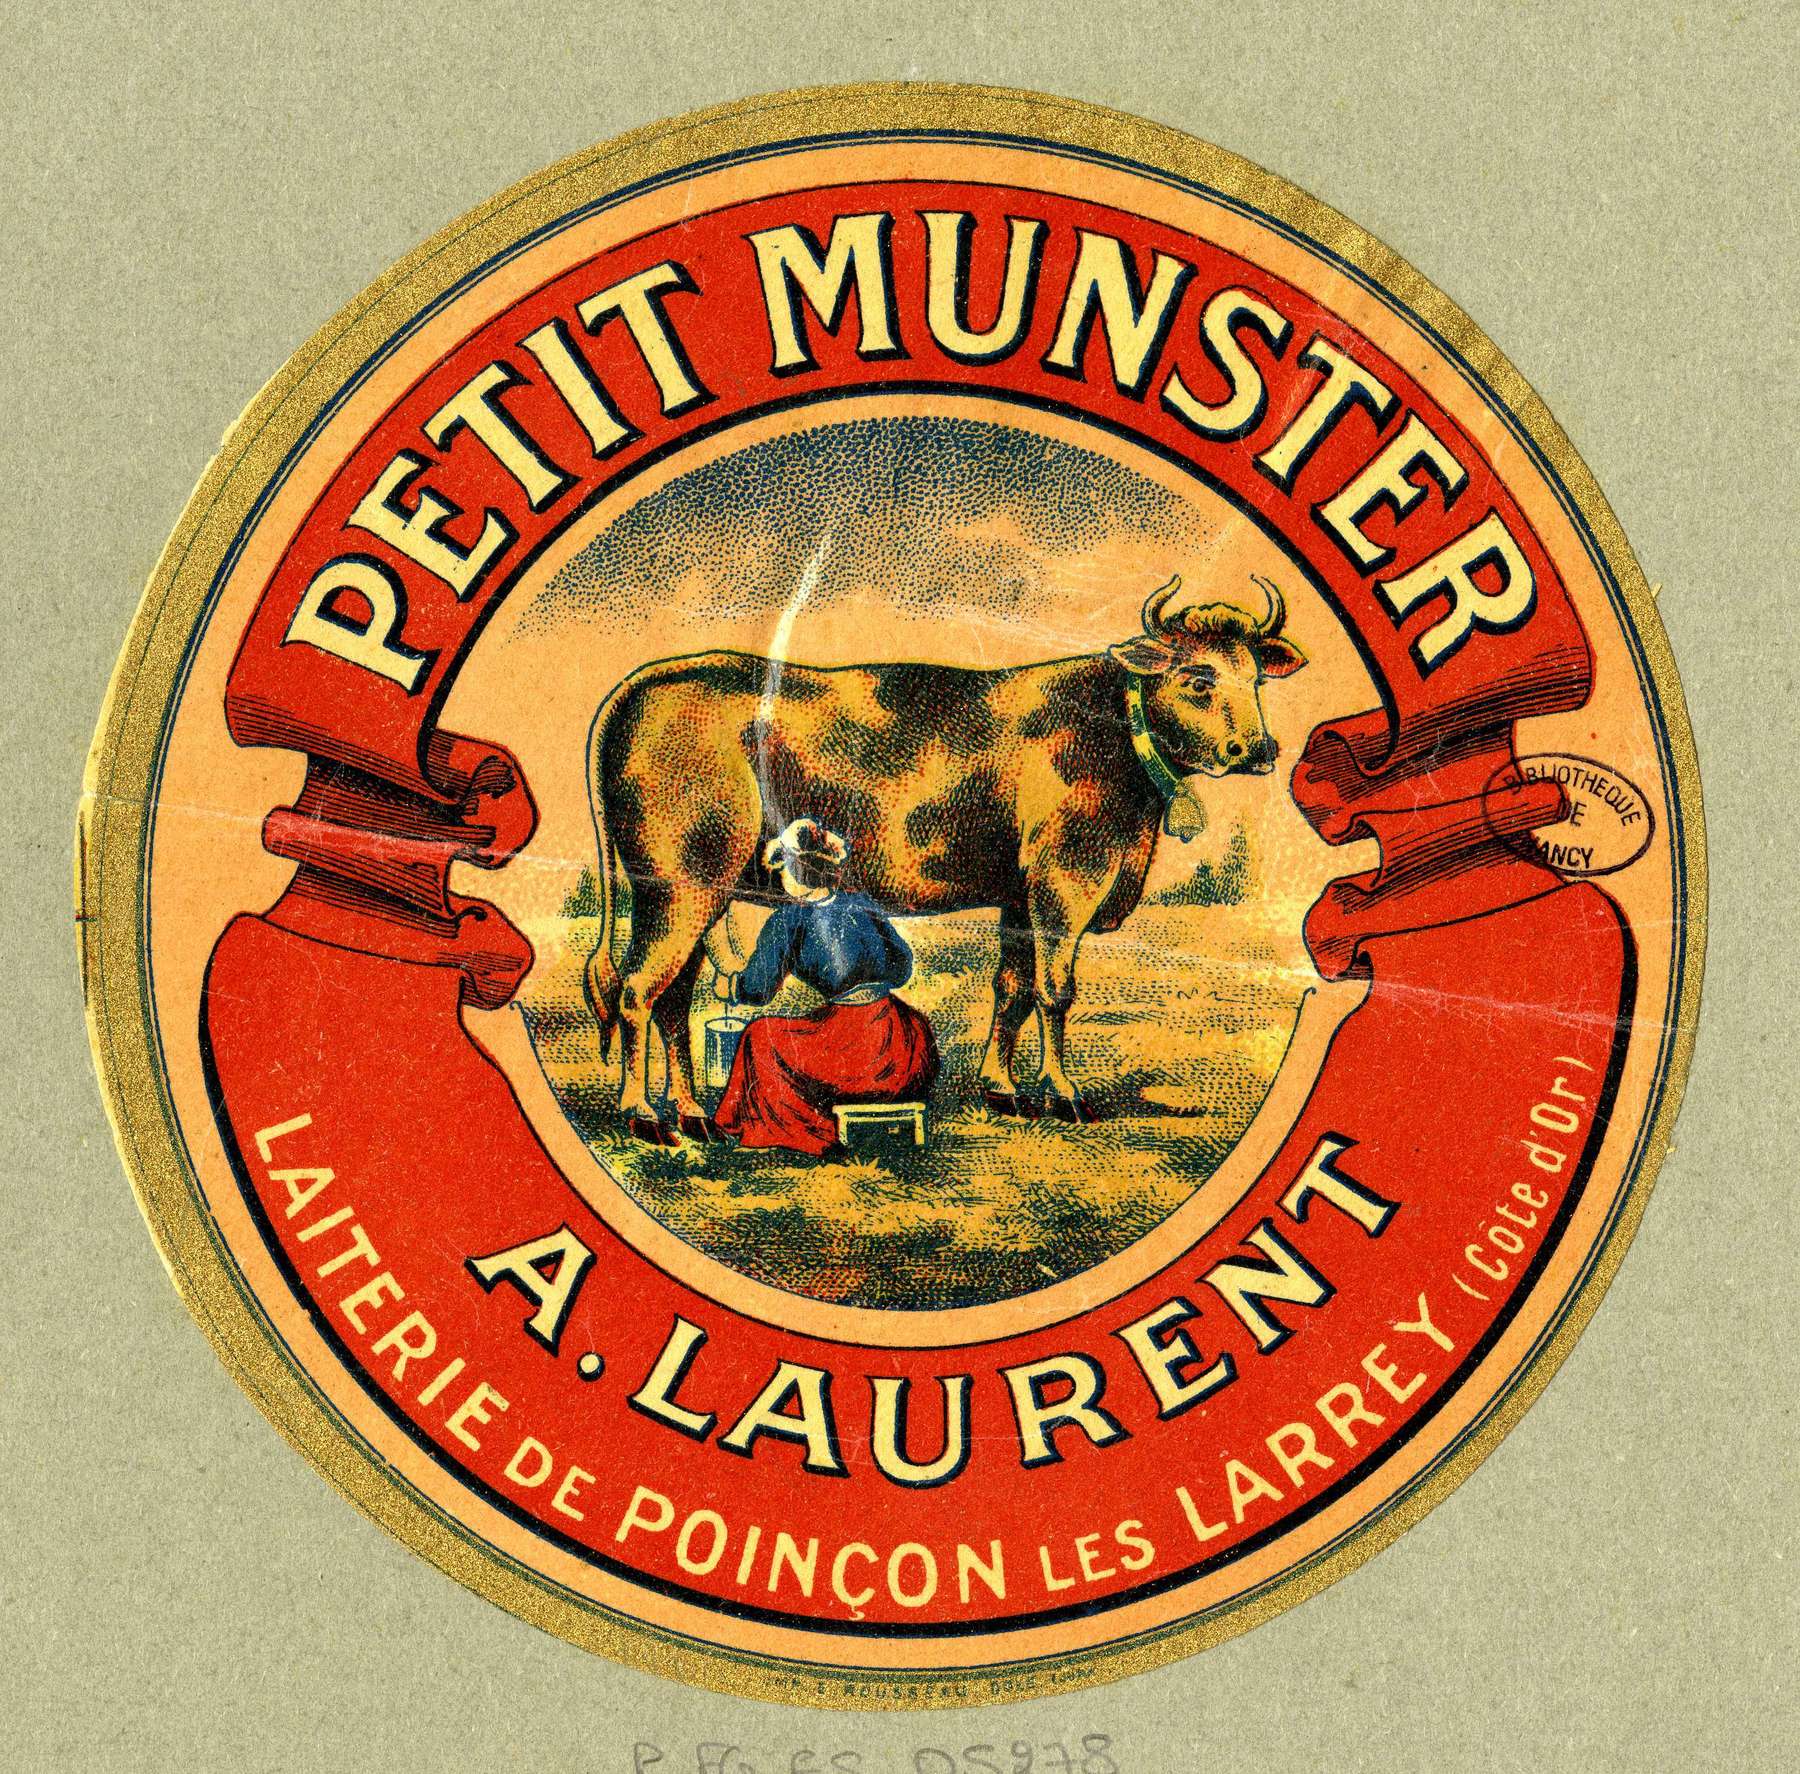 Contenu du Petit Munster